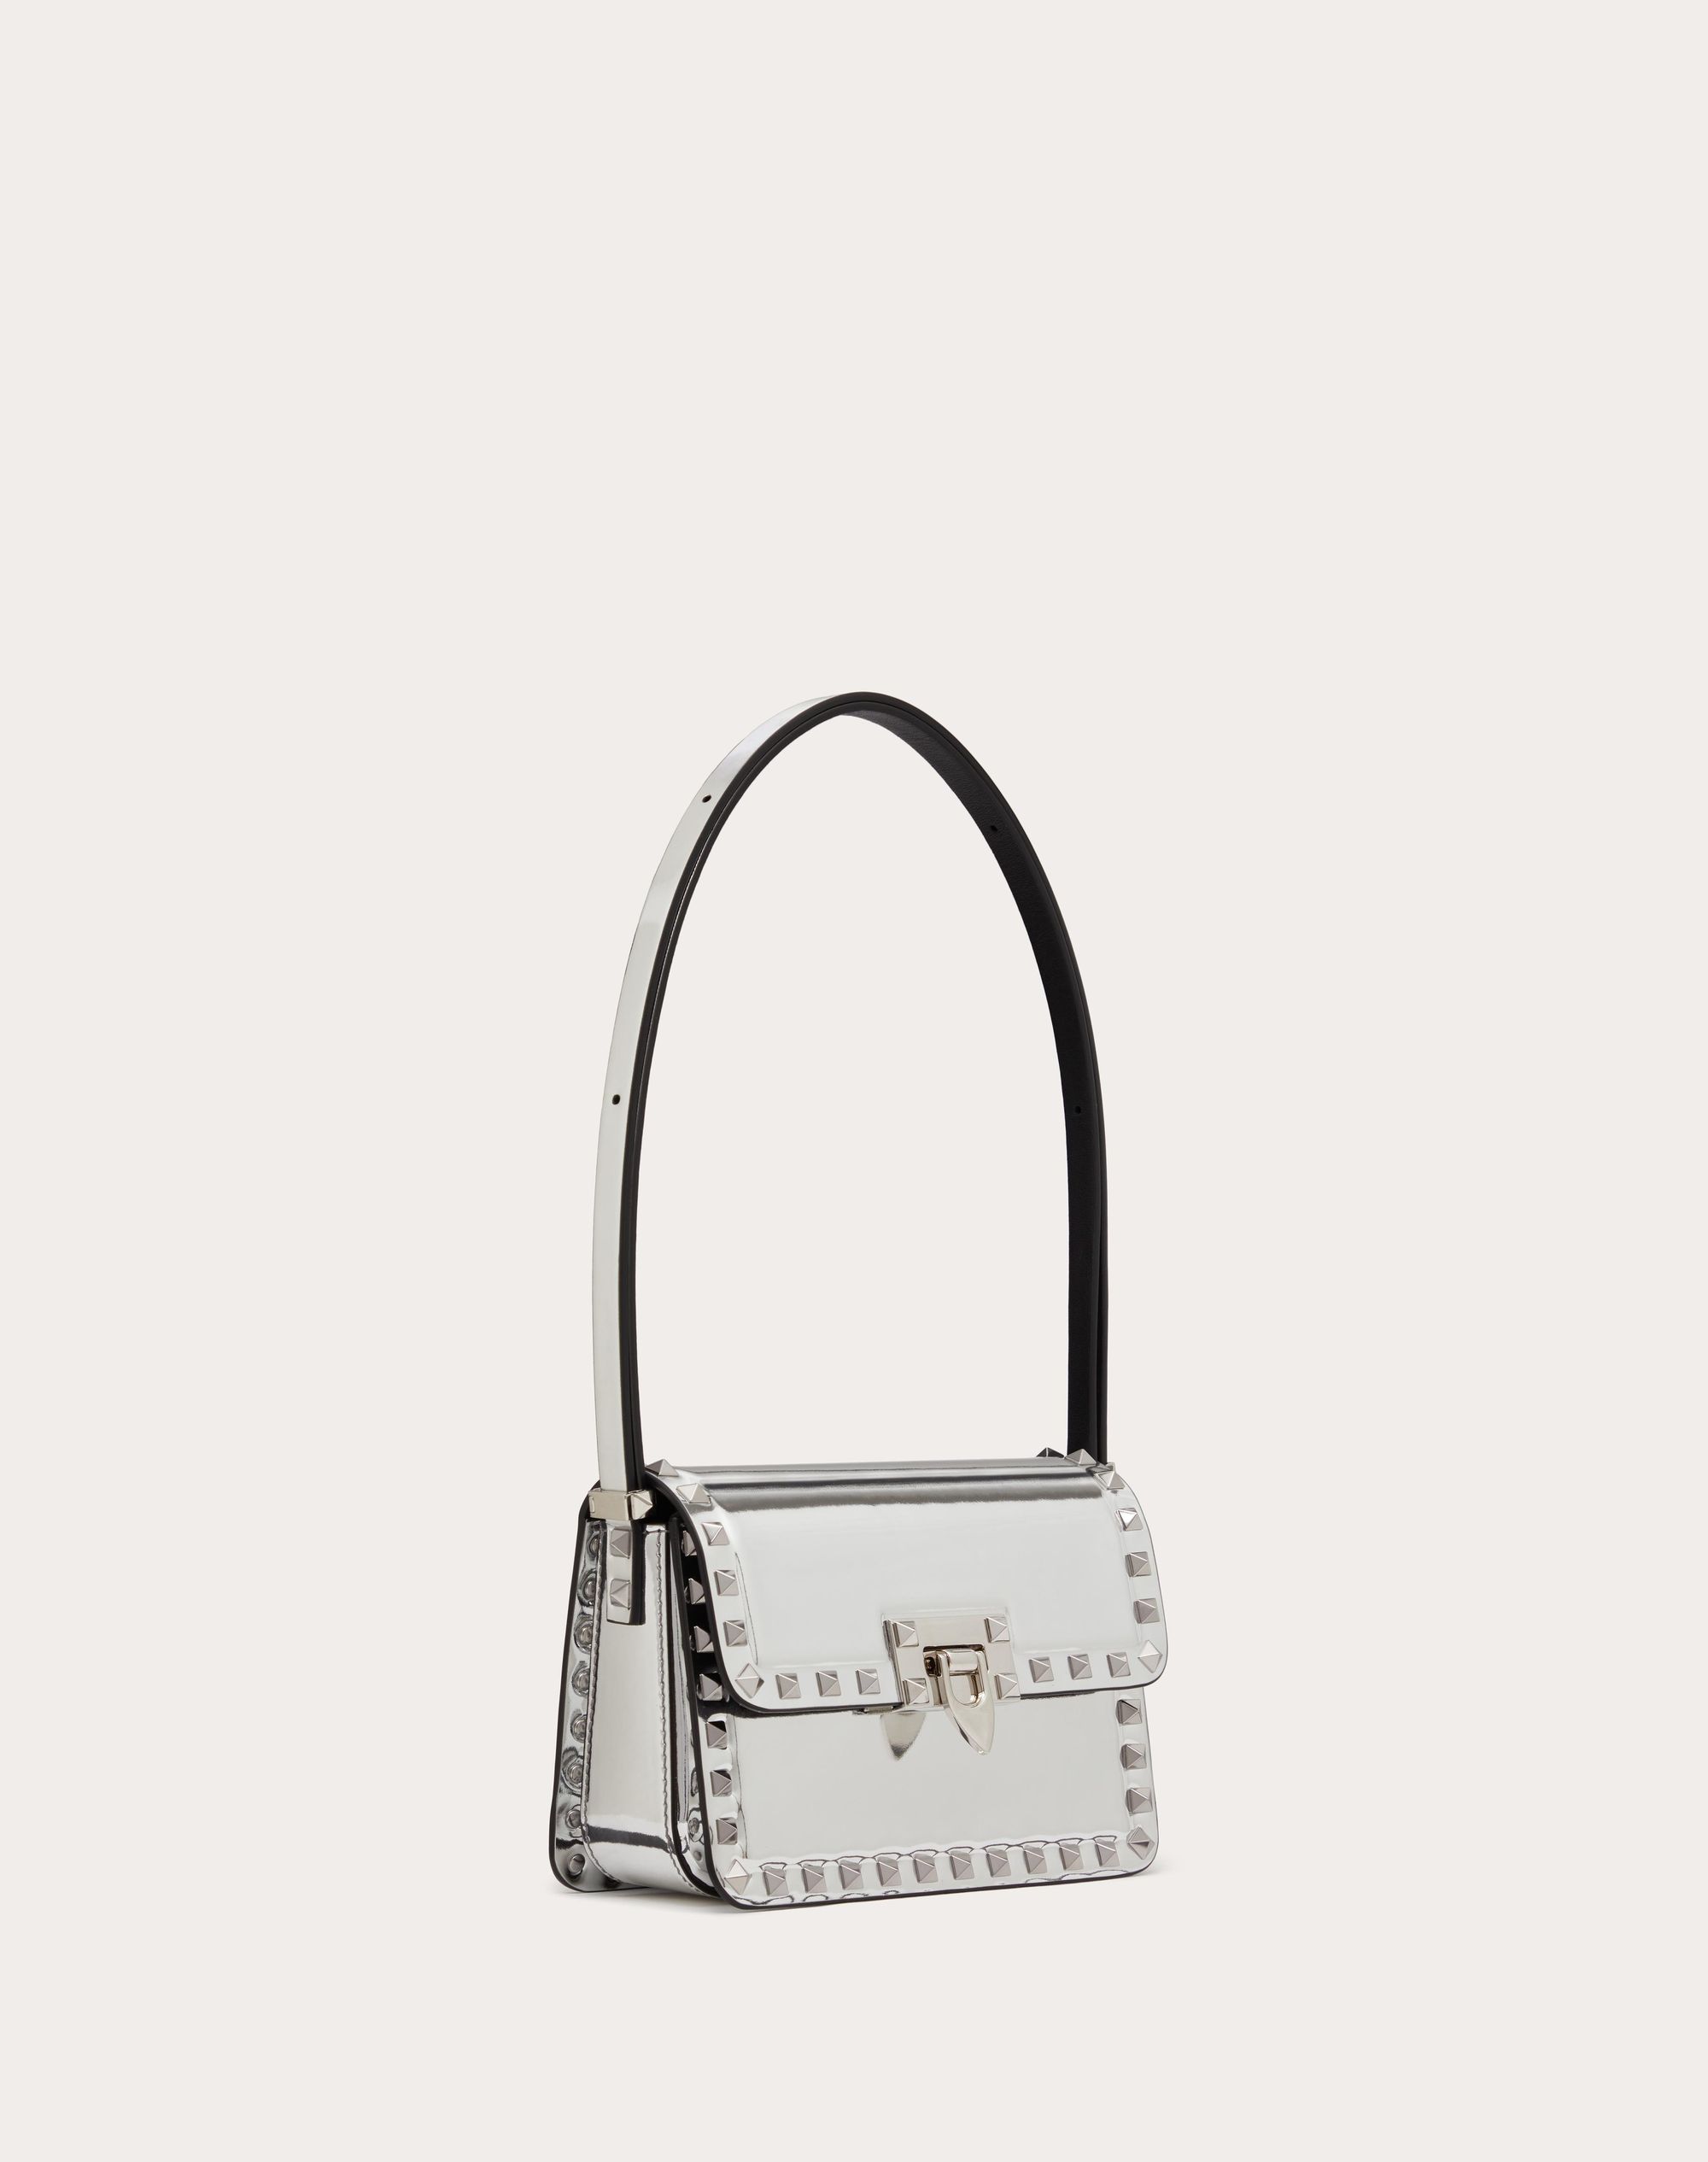 Image of a silver mirrored Valentino Garavani handbag